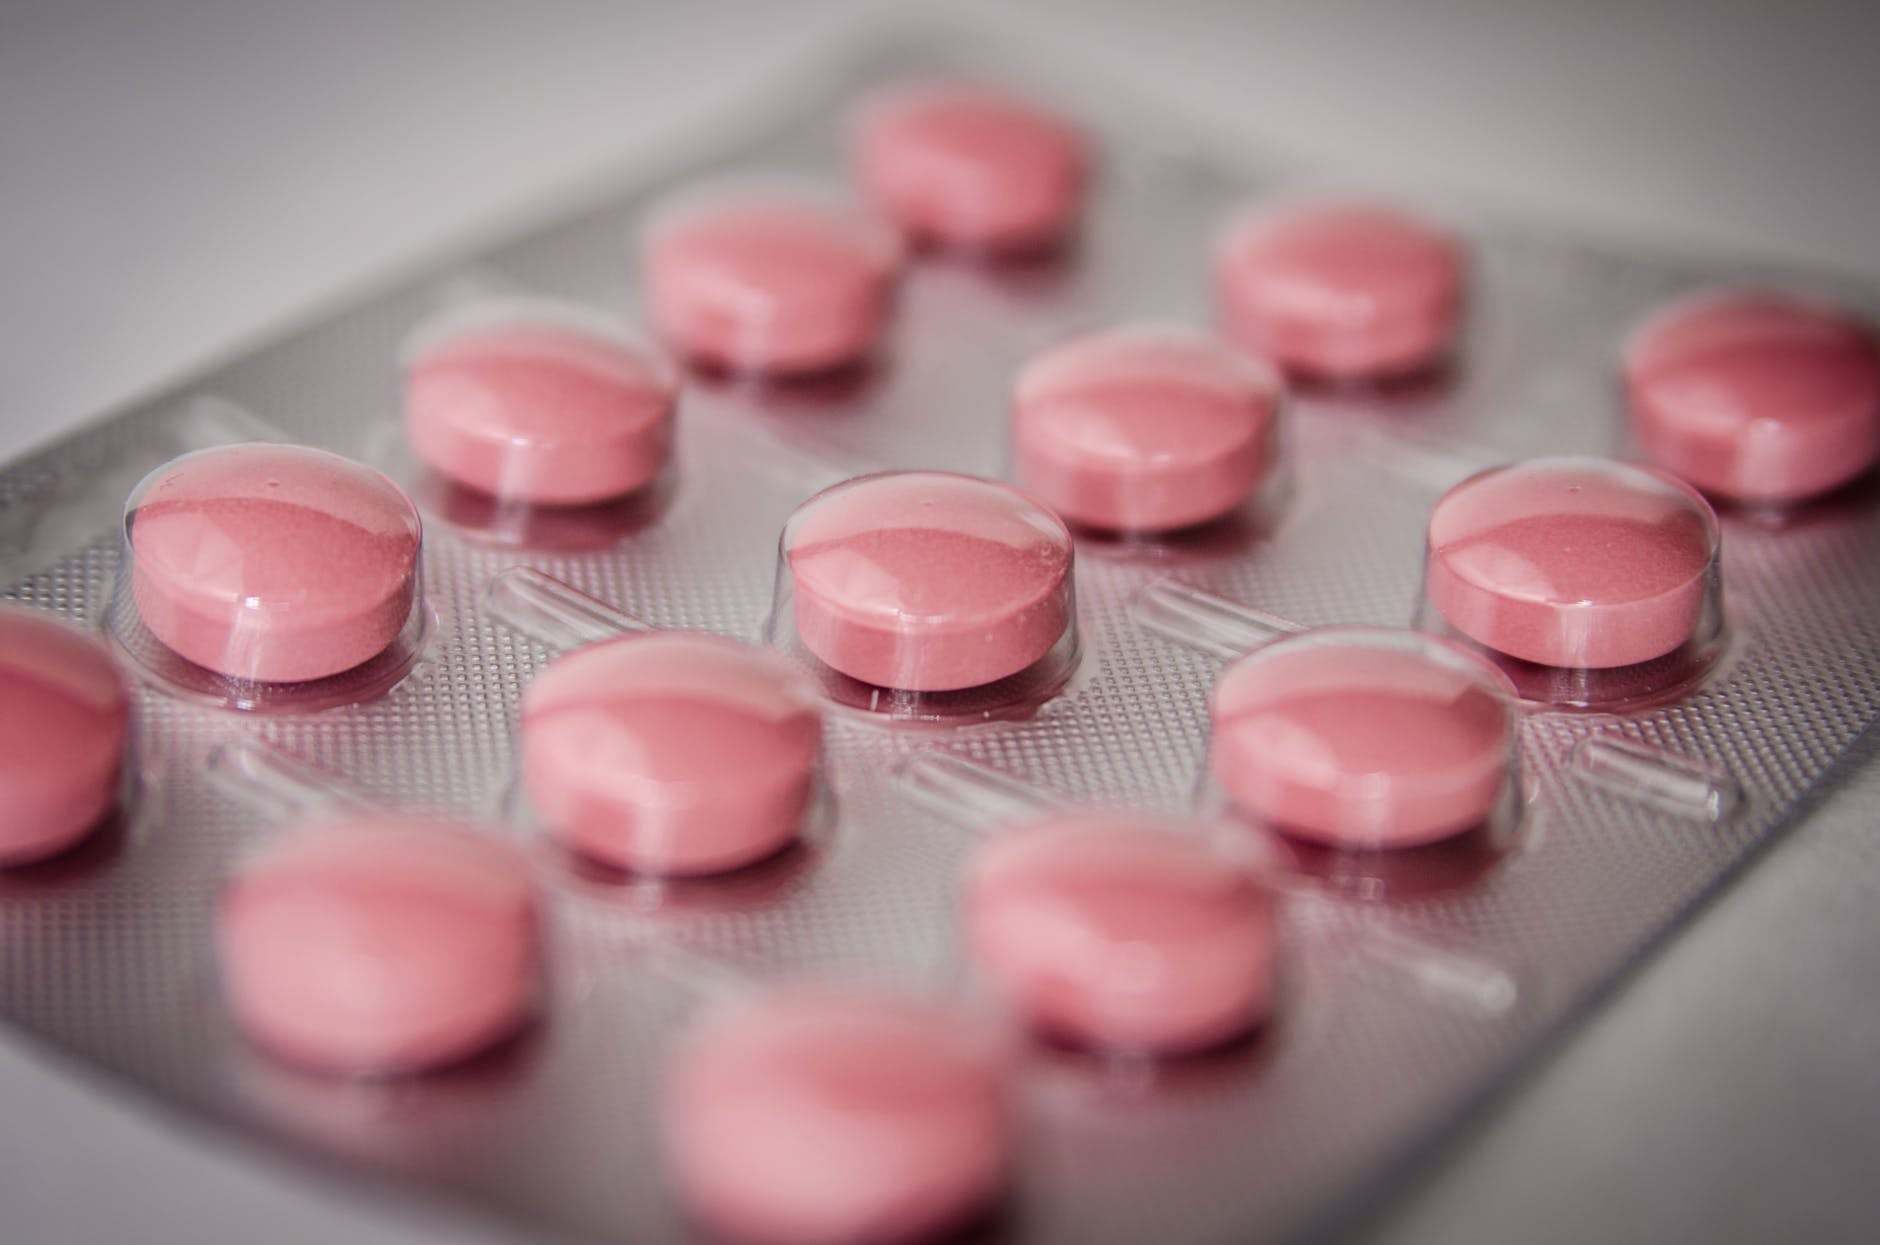 https://www.pexels.com/photo/pink-round-medication-pill-51929/